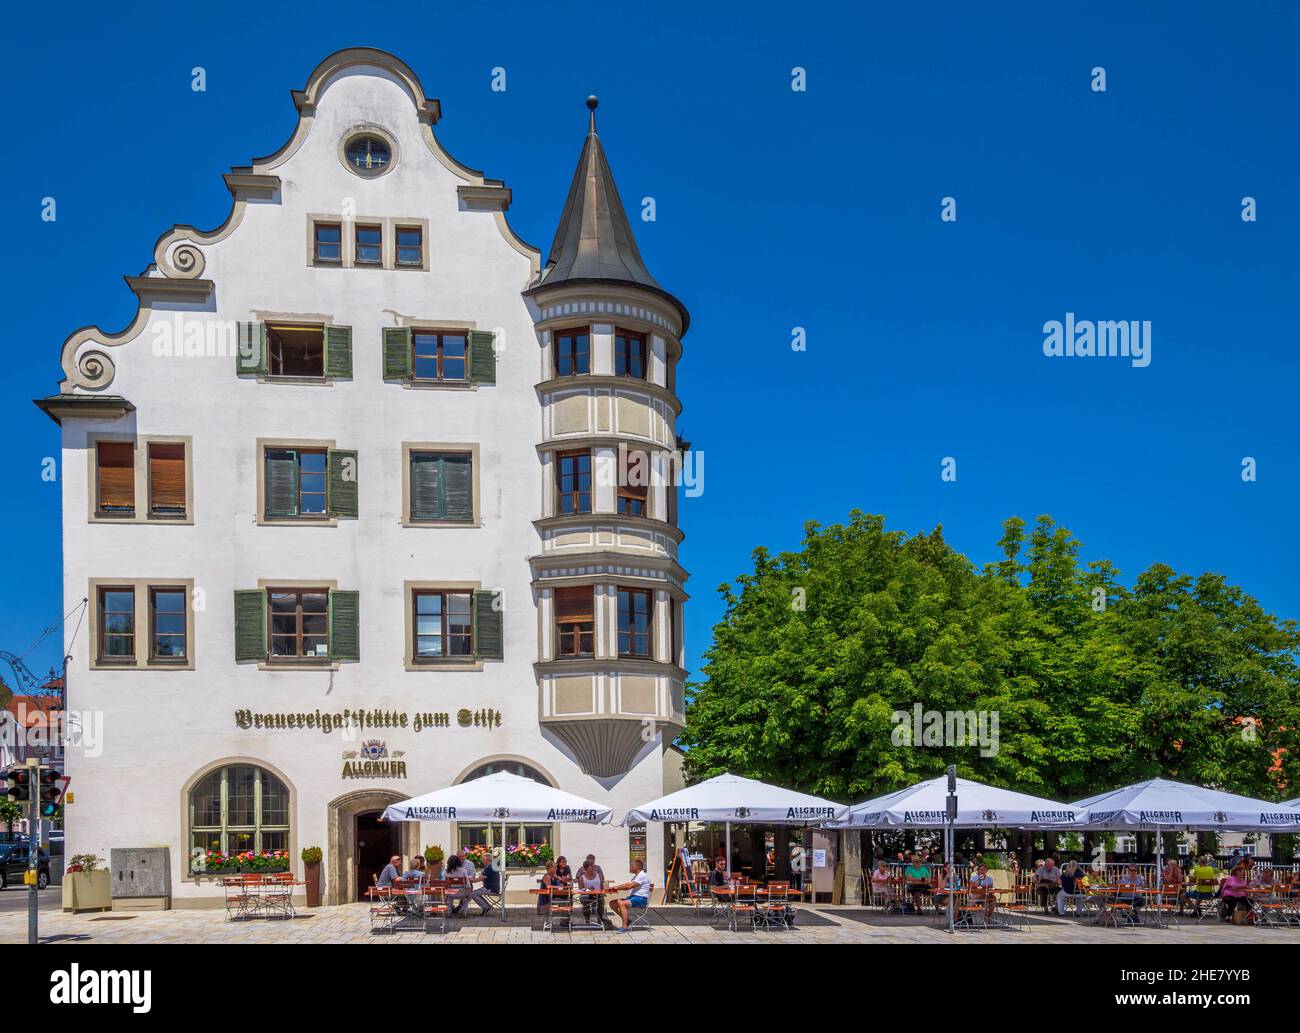 Restaurant zum Stift a Kempten, Allgäu, Baviera, Germania Foto Stock